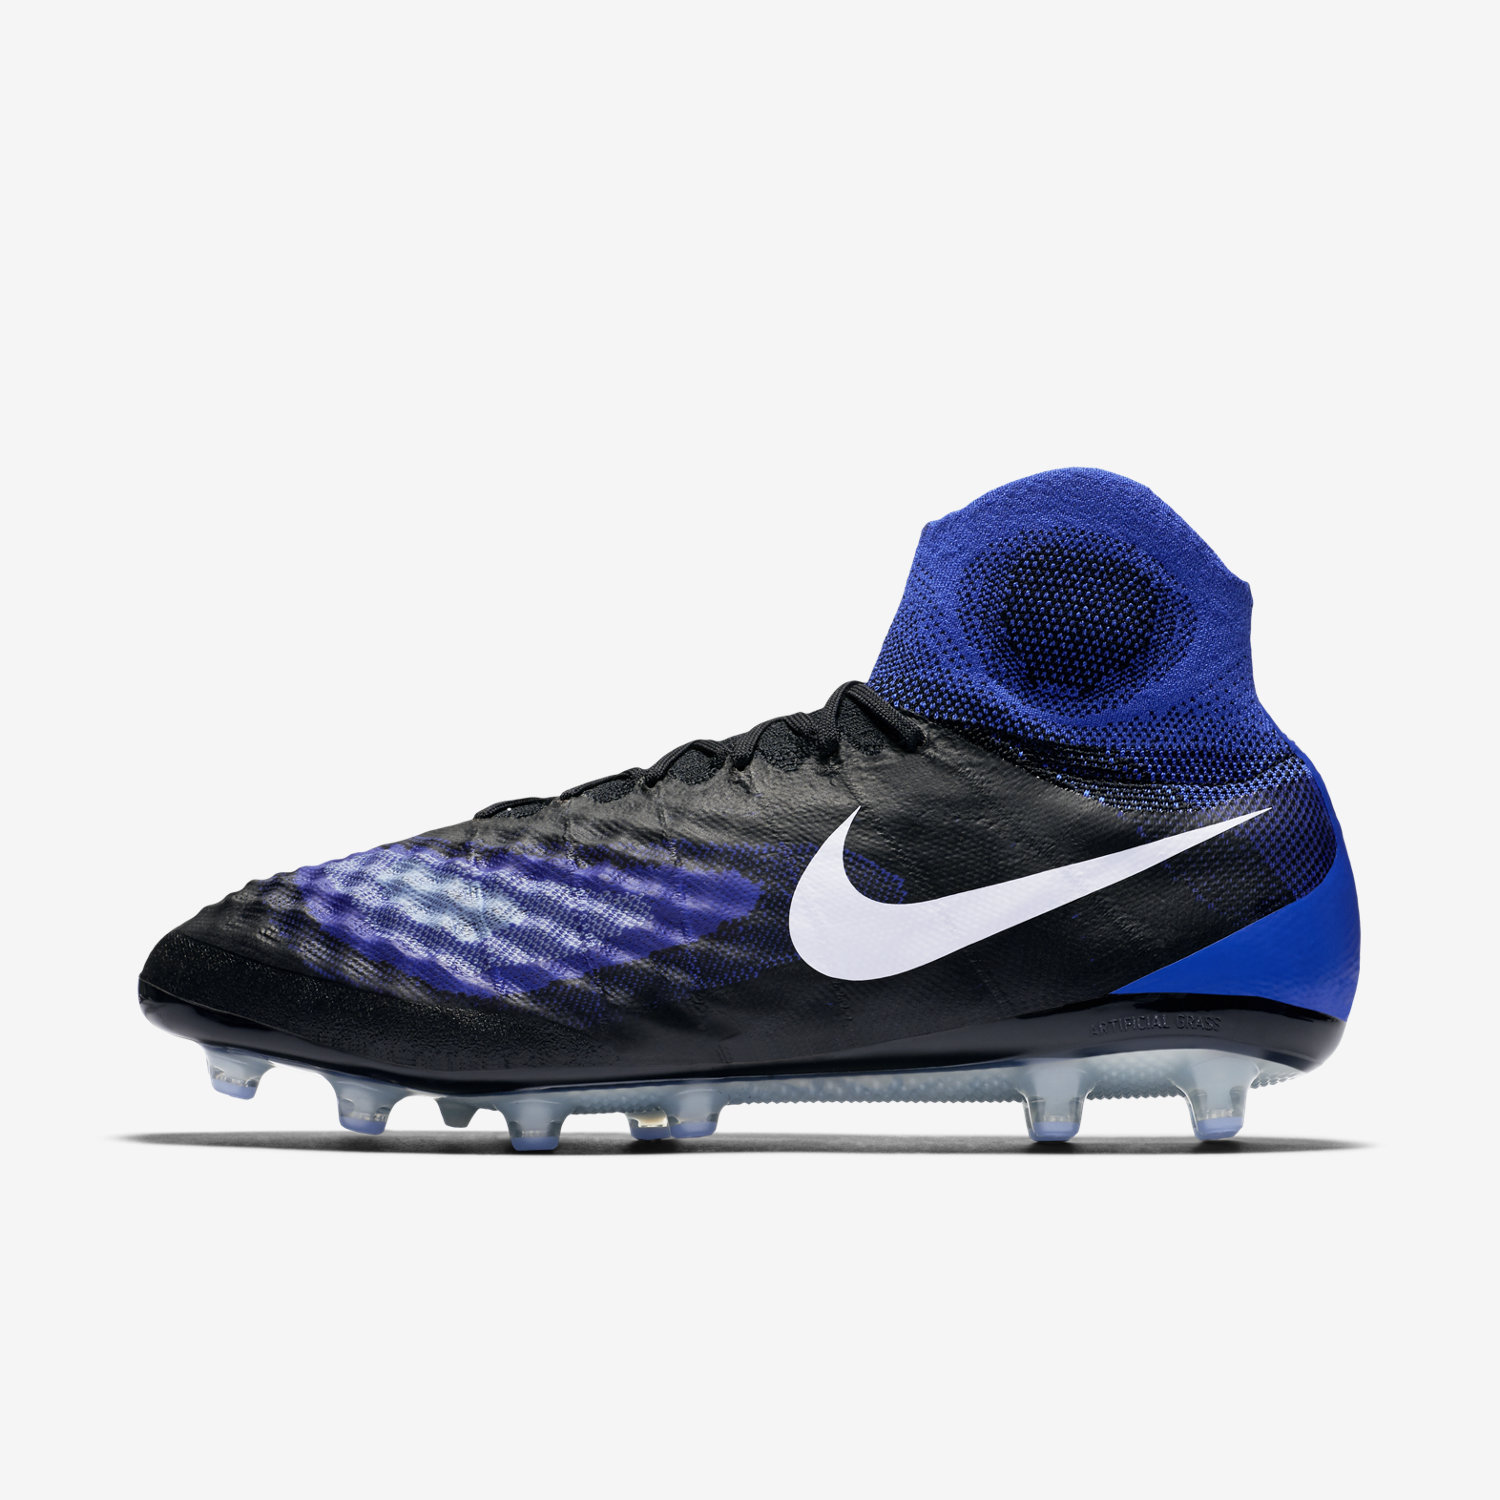 Nike Magista Obra II AG-PRO - Men's Artificial-Grass Football Boot